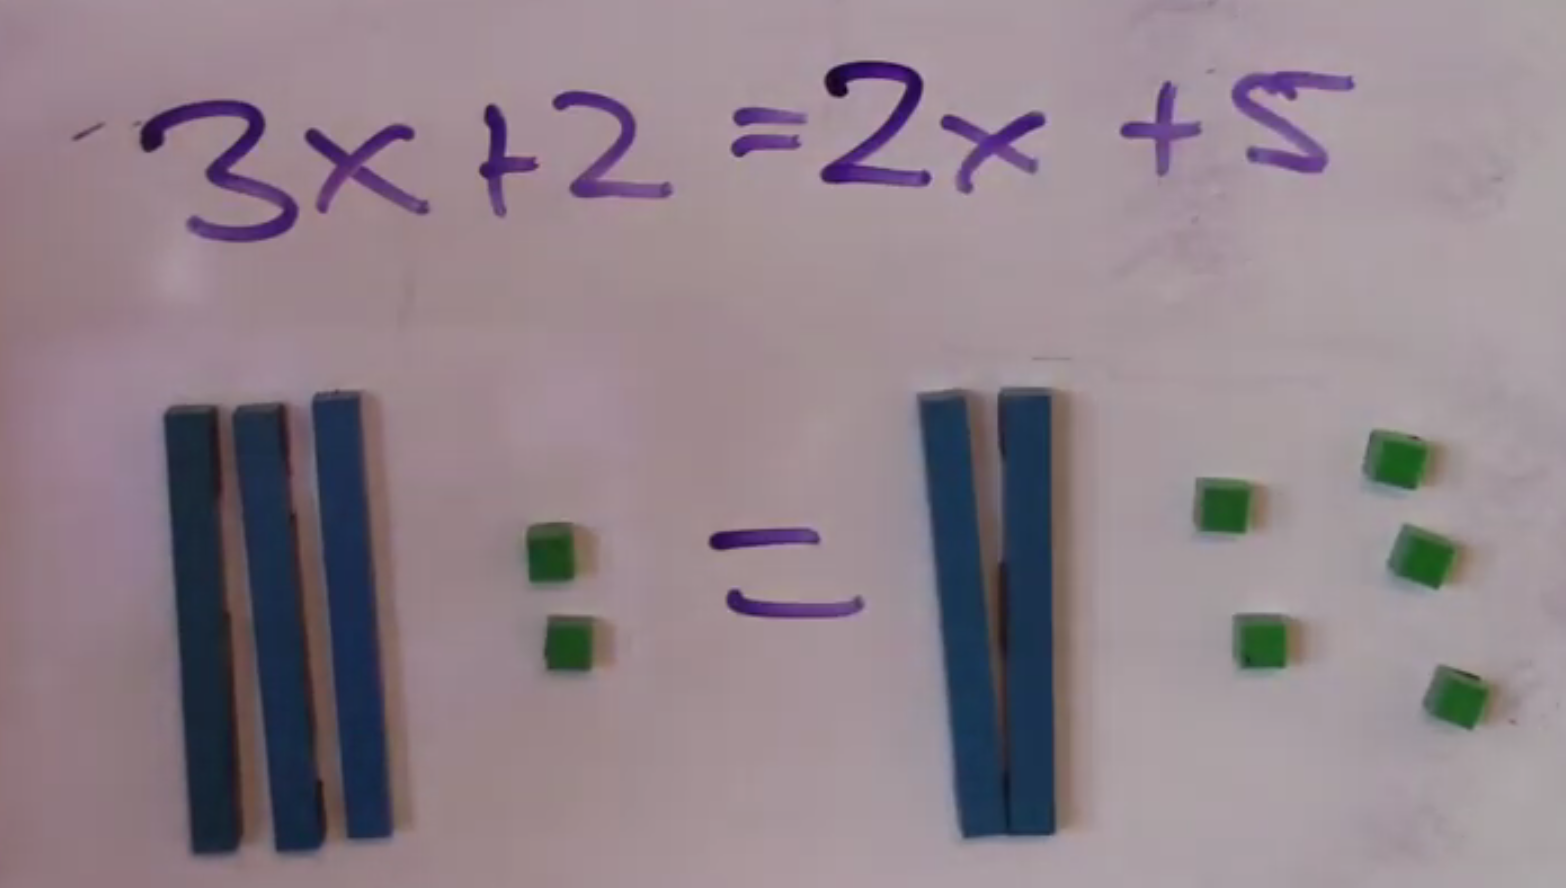 Problem solving with base ten blocks.
Mortensen Math
Montessori
Homeschool